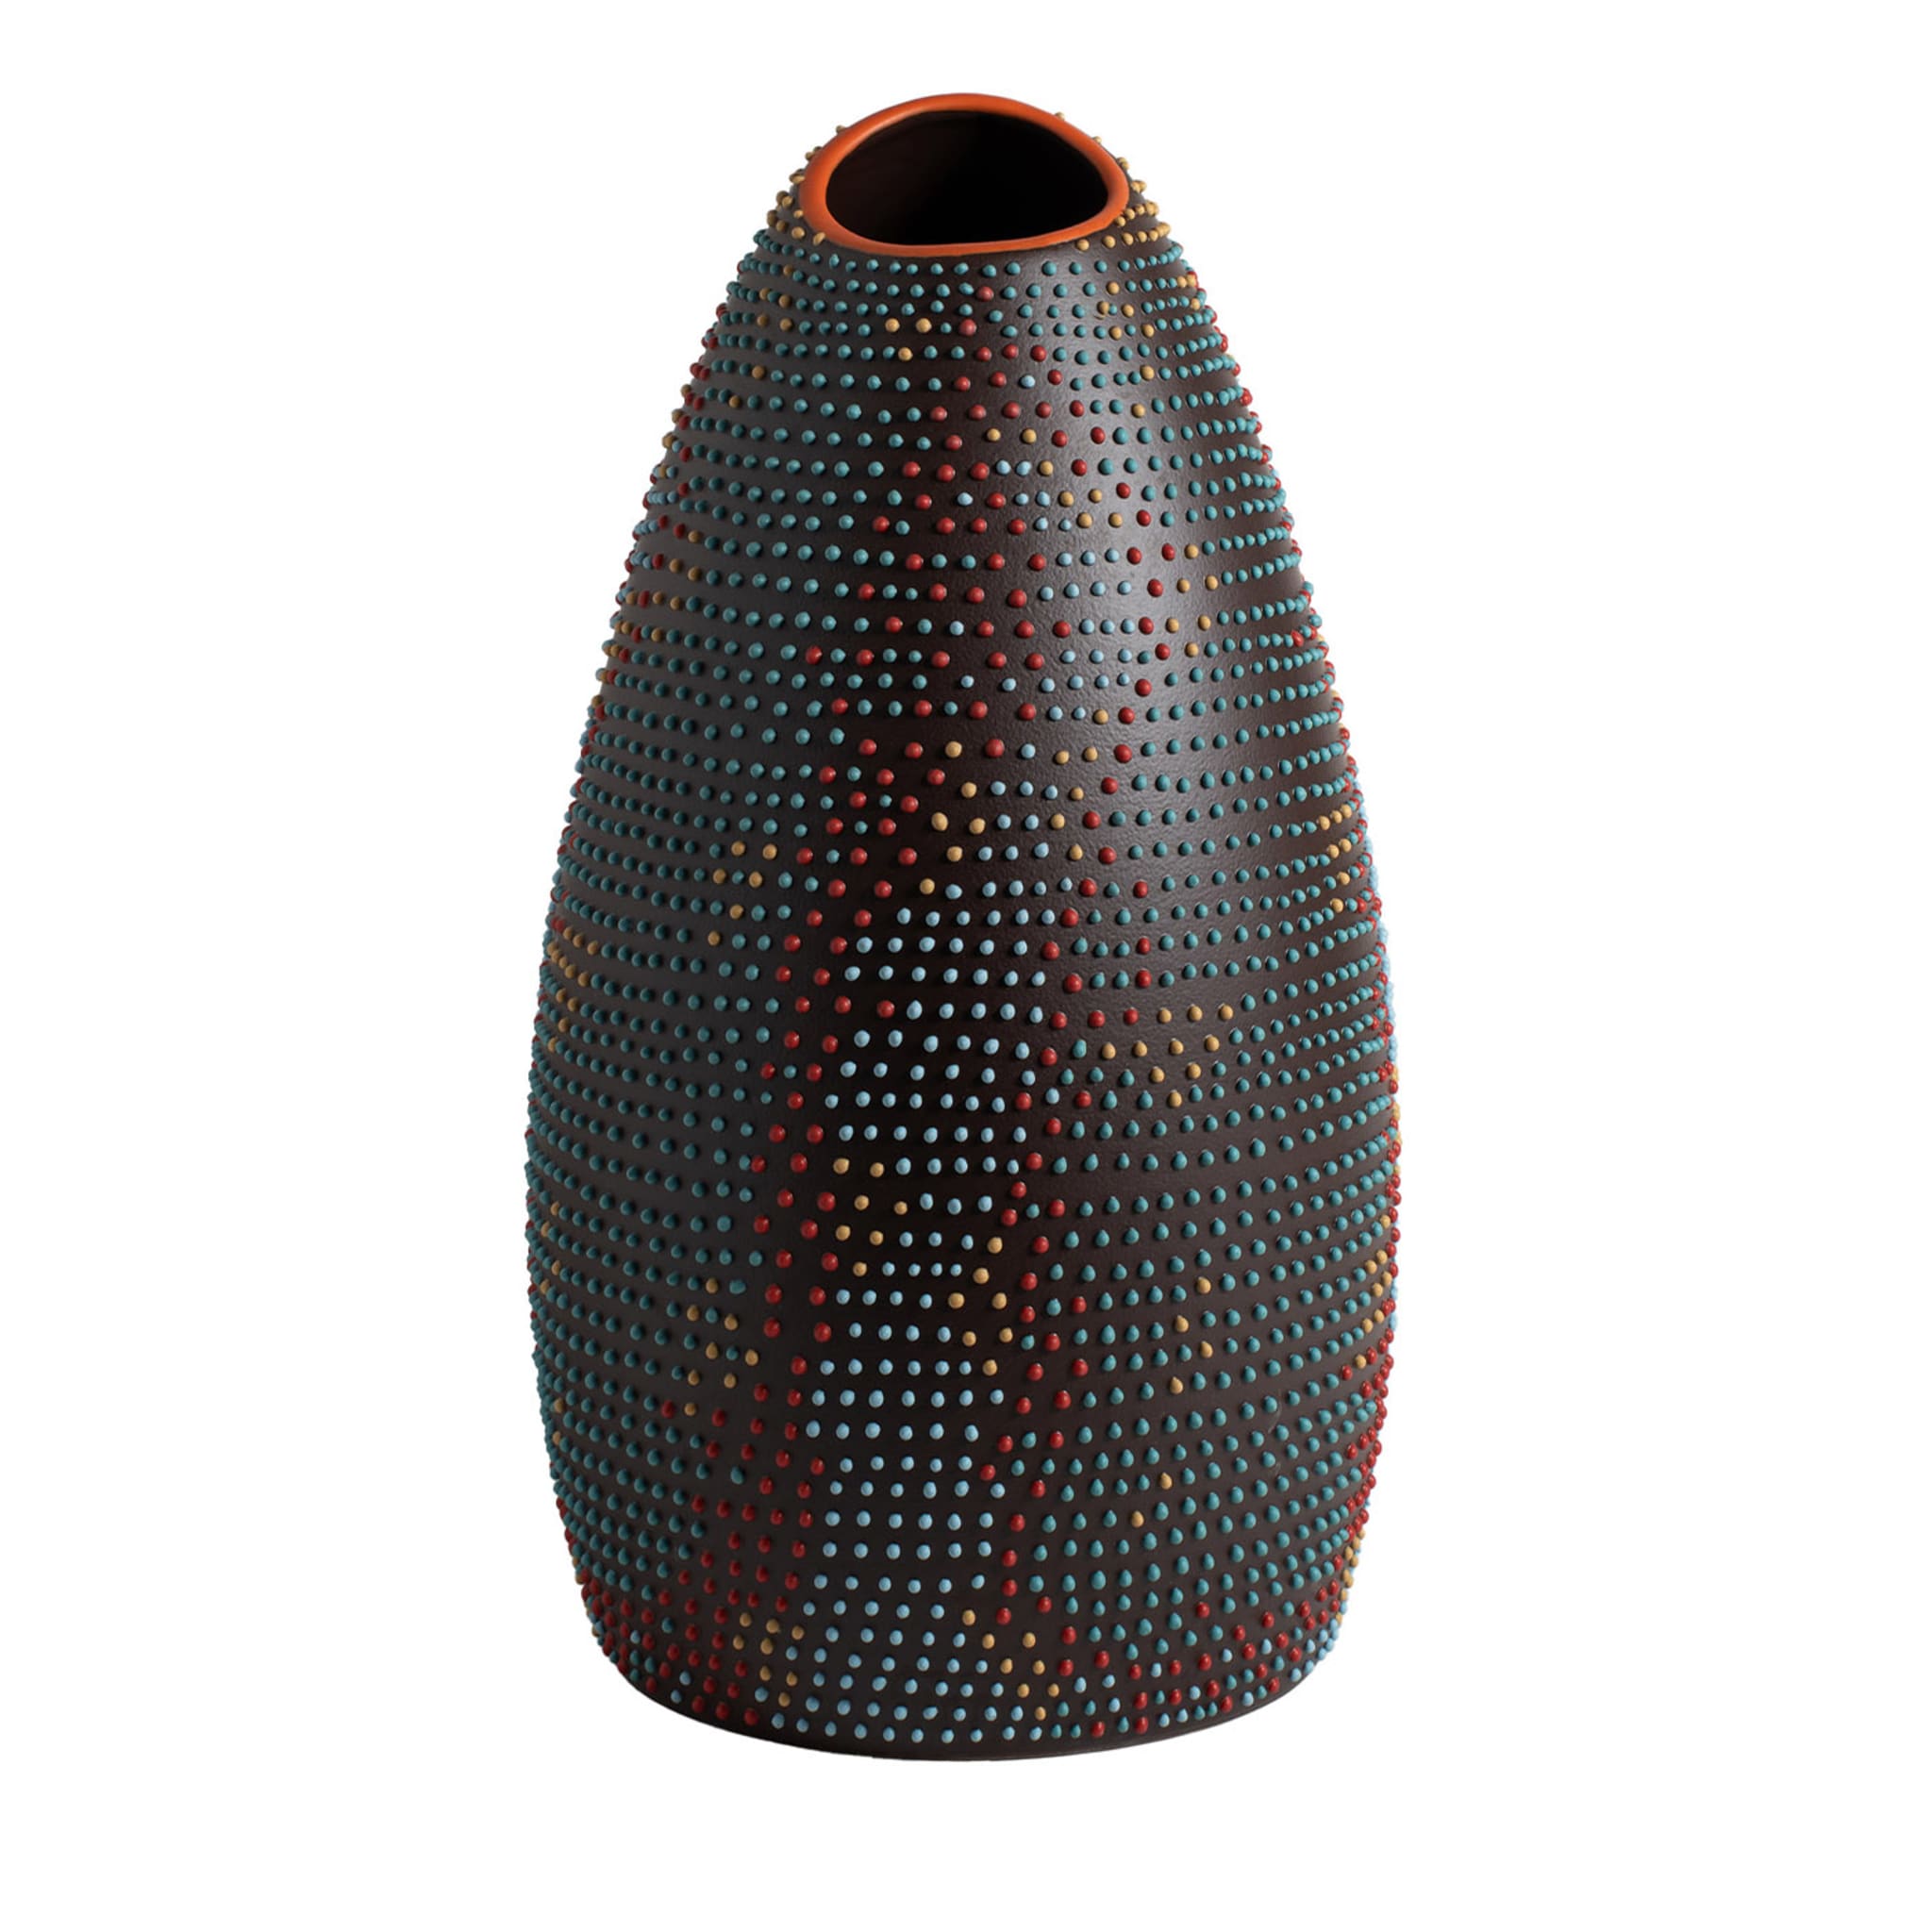 RIC-4 Chameleon Polychrome Vase von A. Mancuso/Analogia Projects - Hauptansicht